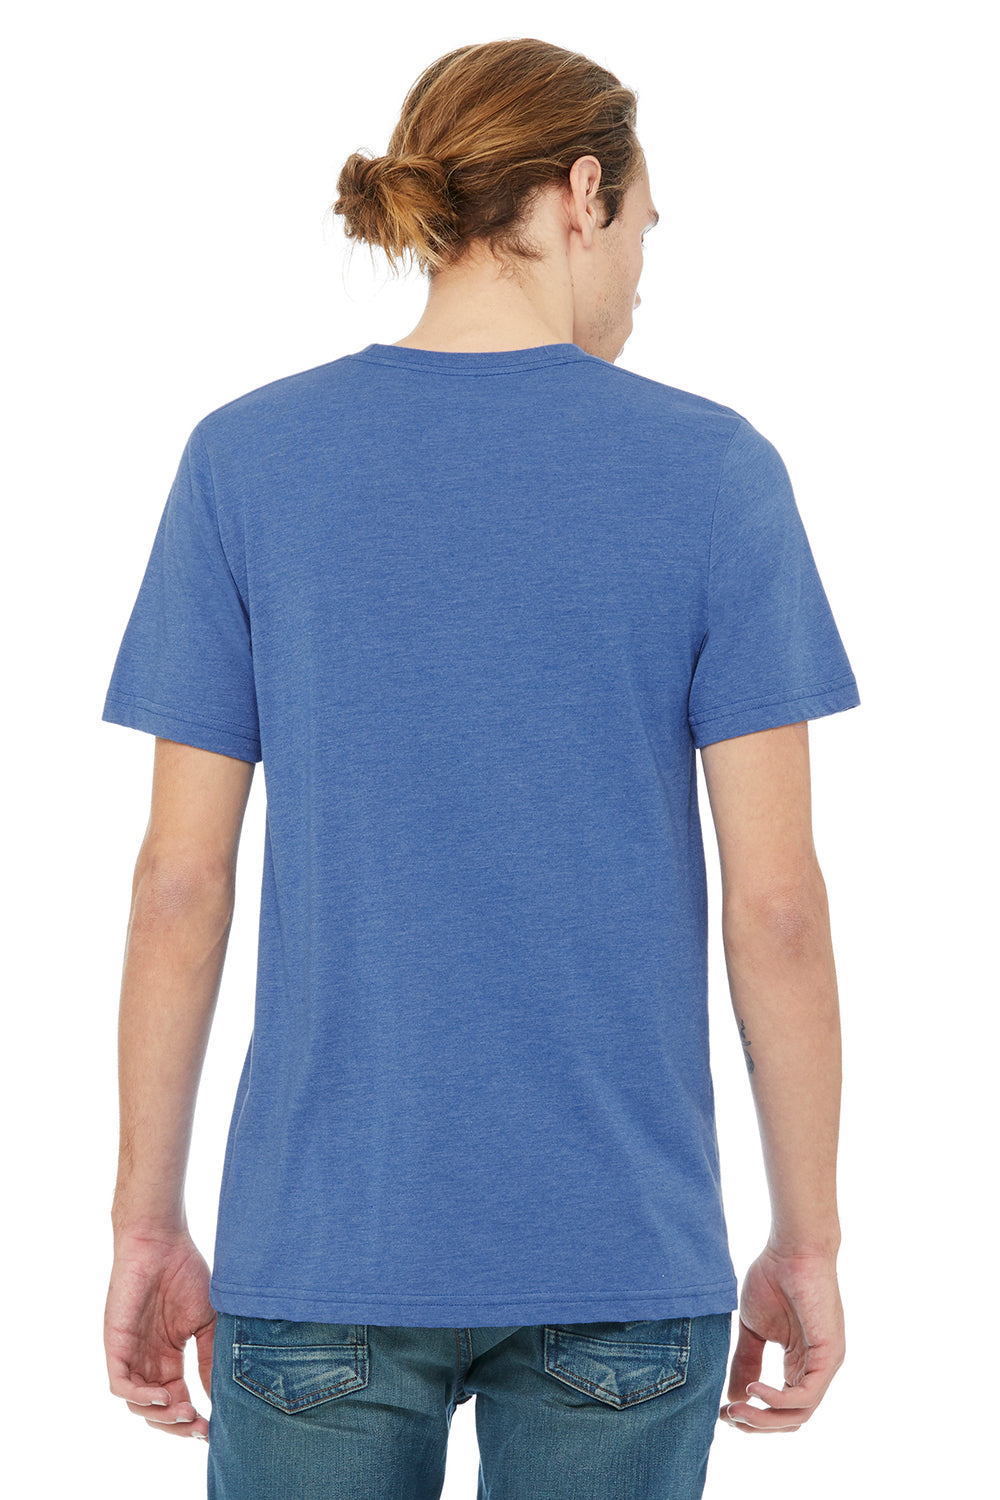 Bella + Canvas 3021 Mens Jersey Short Sleeve Crewneck T-Shirt w/ Pocket Heather Royal Blue/Navy Blue Back